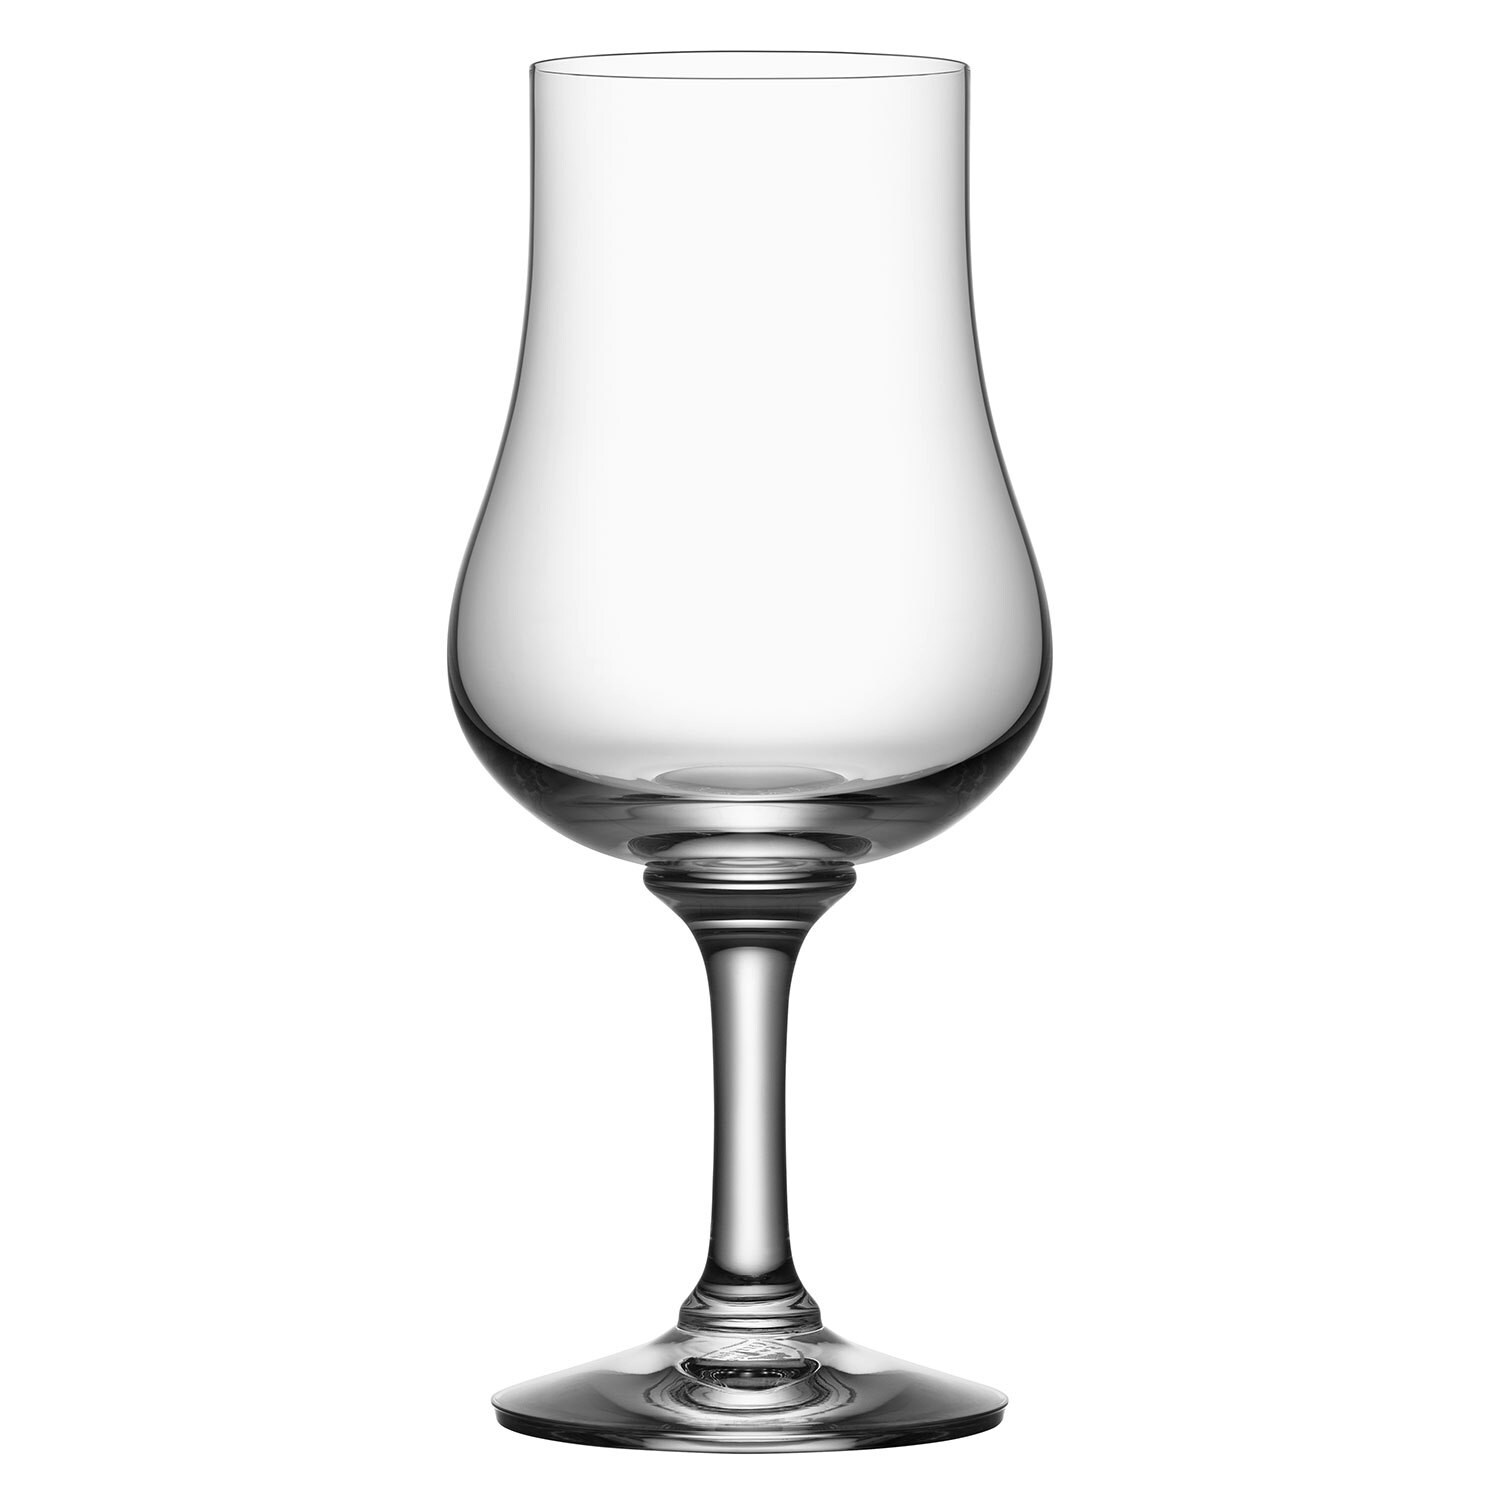 https://royaldesign.com/image/2/orrefors-elixir-wine-tasting-glass-set-of-4-0